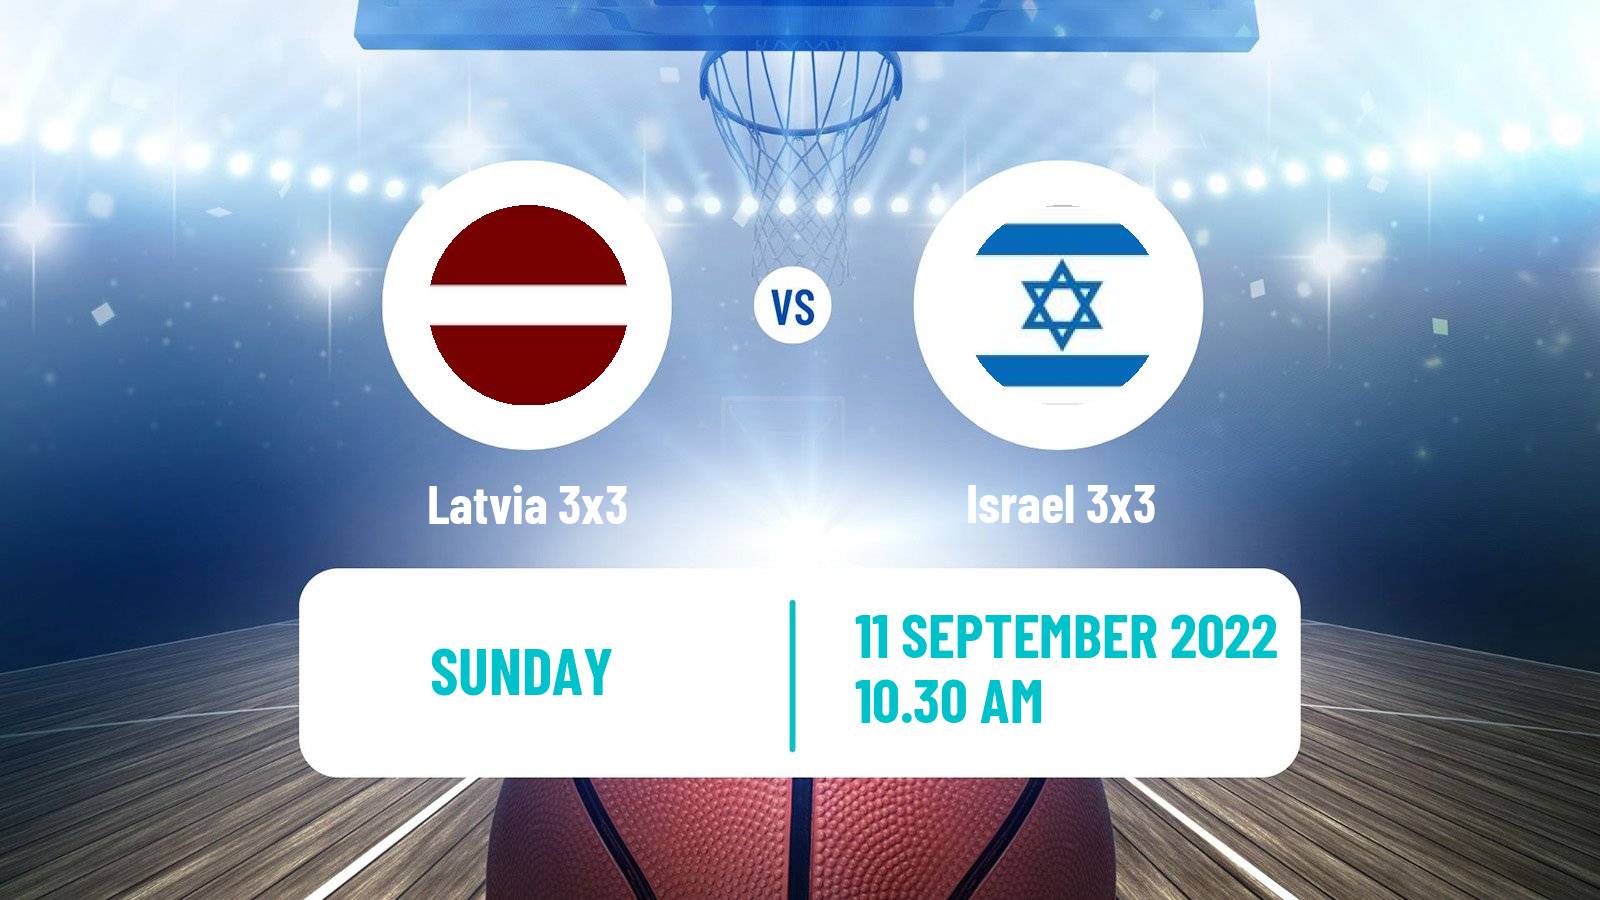 Basketball Europe Cup Basketball 3x3 Latvia 3x3 - Israel 3x3